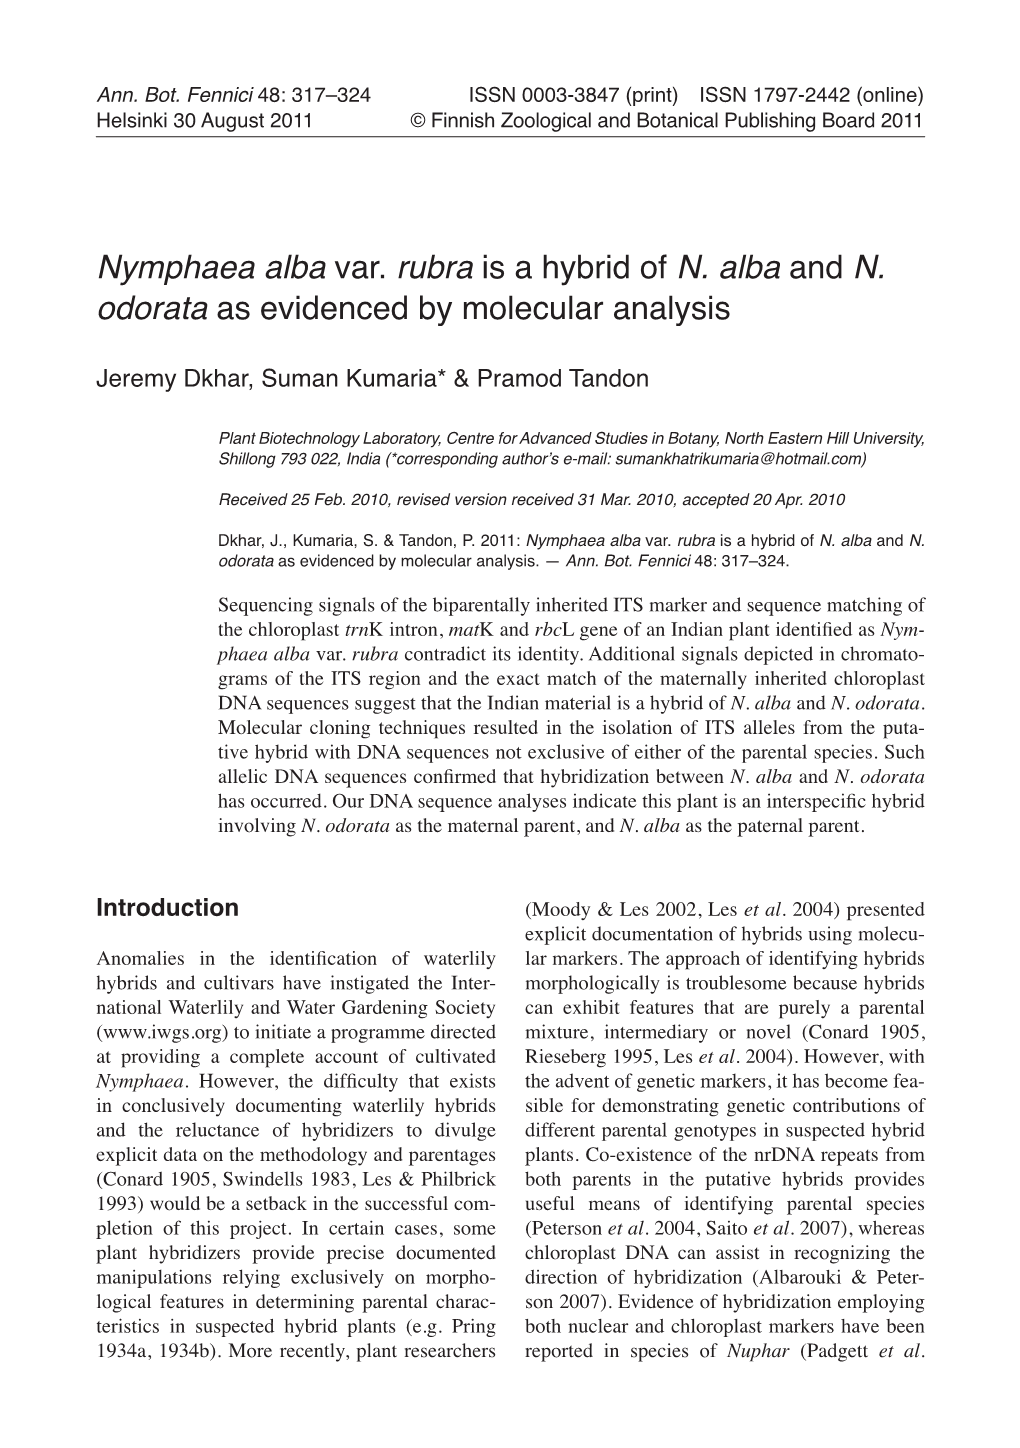 Nymphaea Alba Var. Rubra Is a Hybrid of N. Alba and N. Odorata As Evidenced by Molecular Analysis